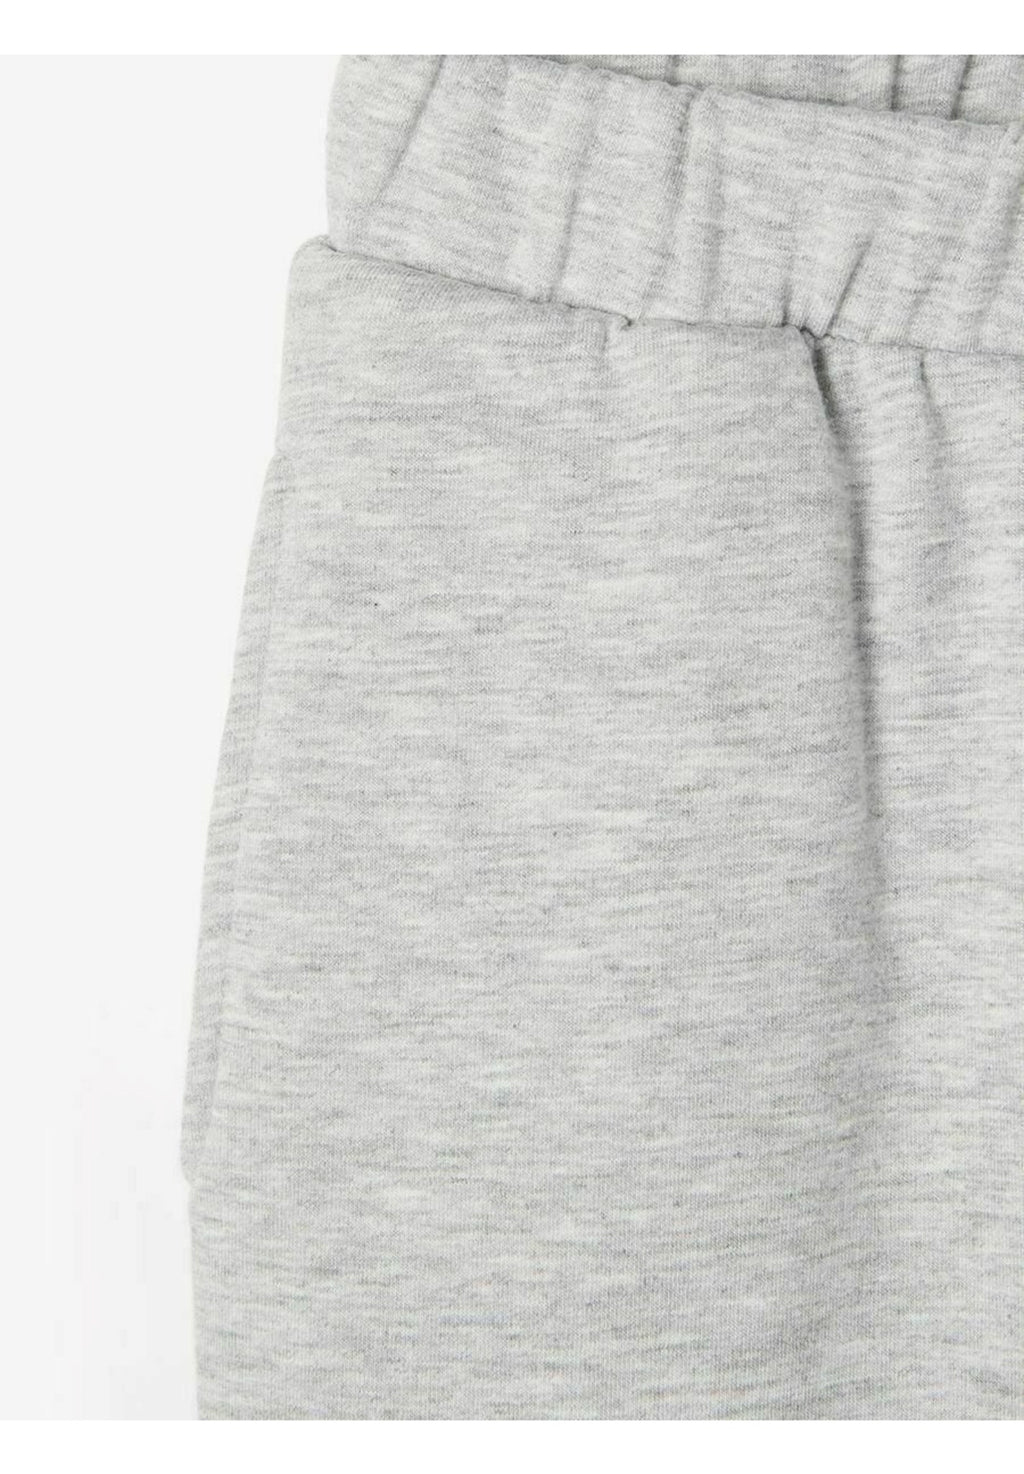 Loose fit Sweatpants - Light grey